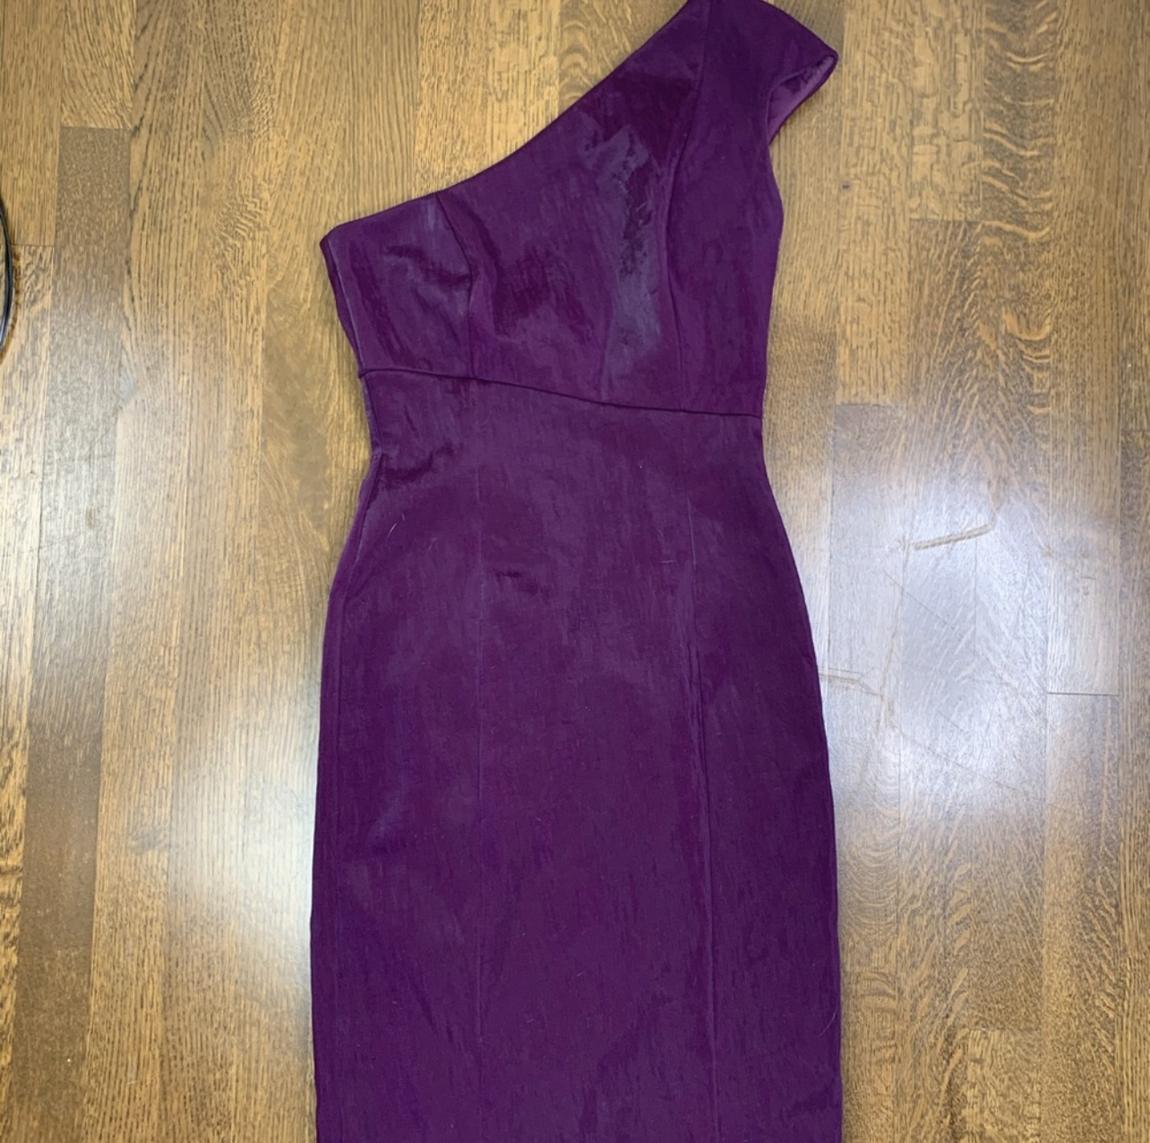 Jasmine De Milo Size 4 Satin Purple Cocktail Dress on Queenly